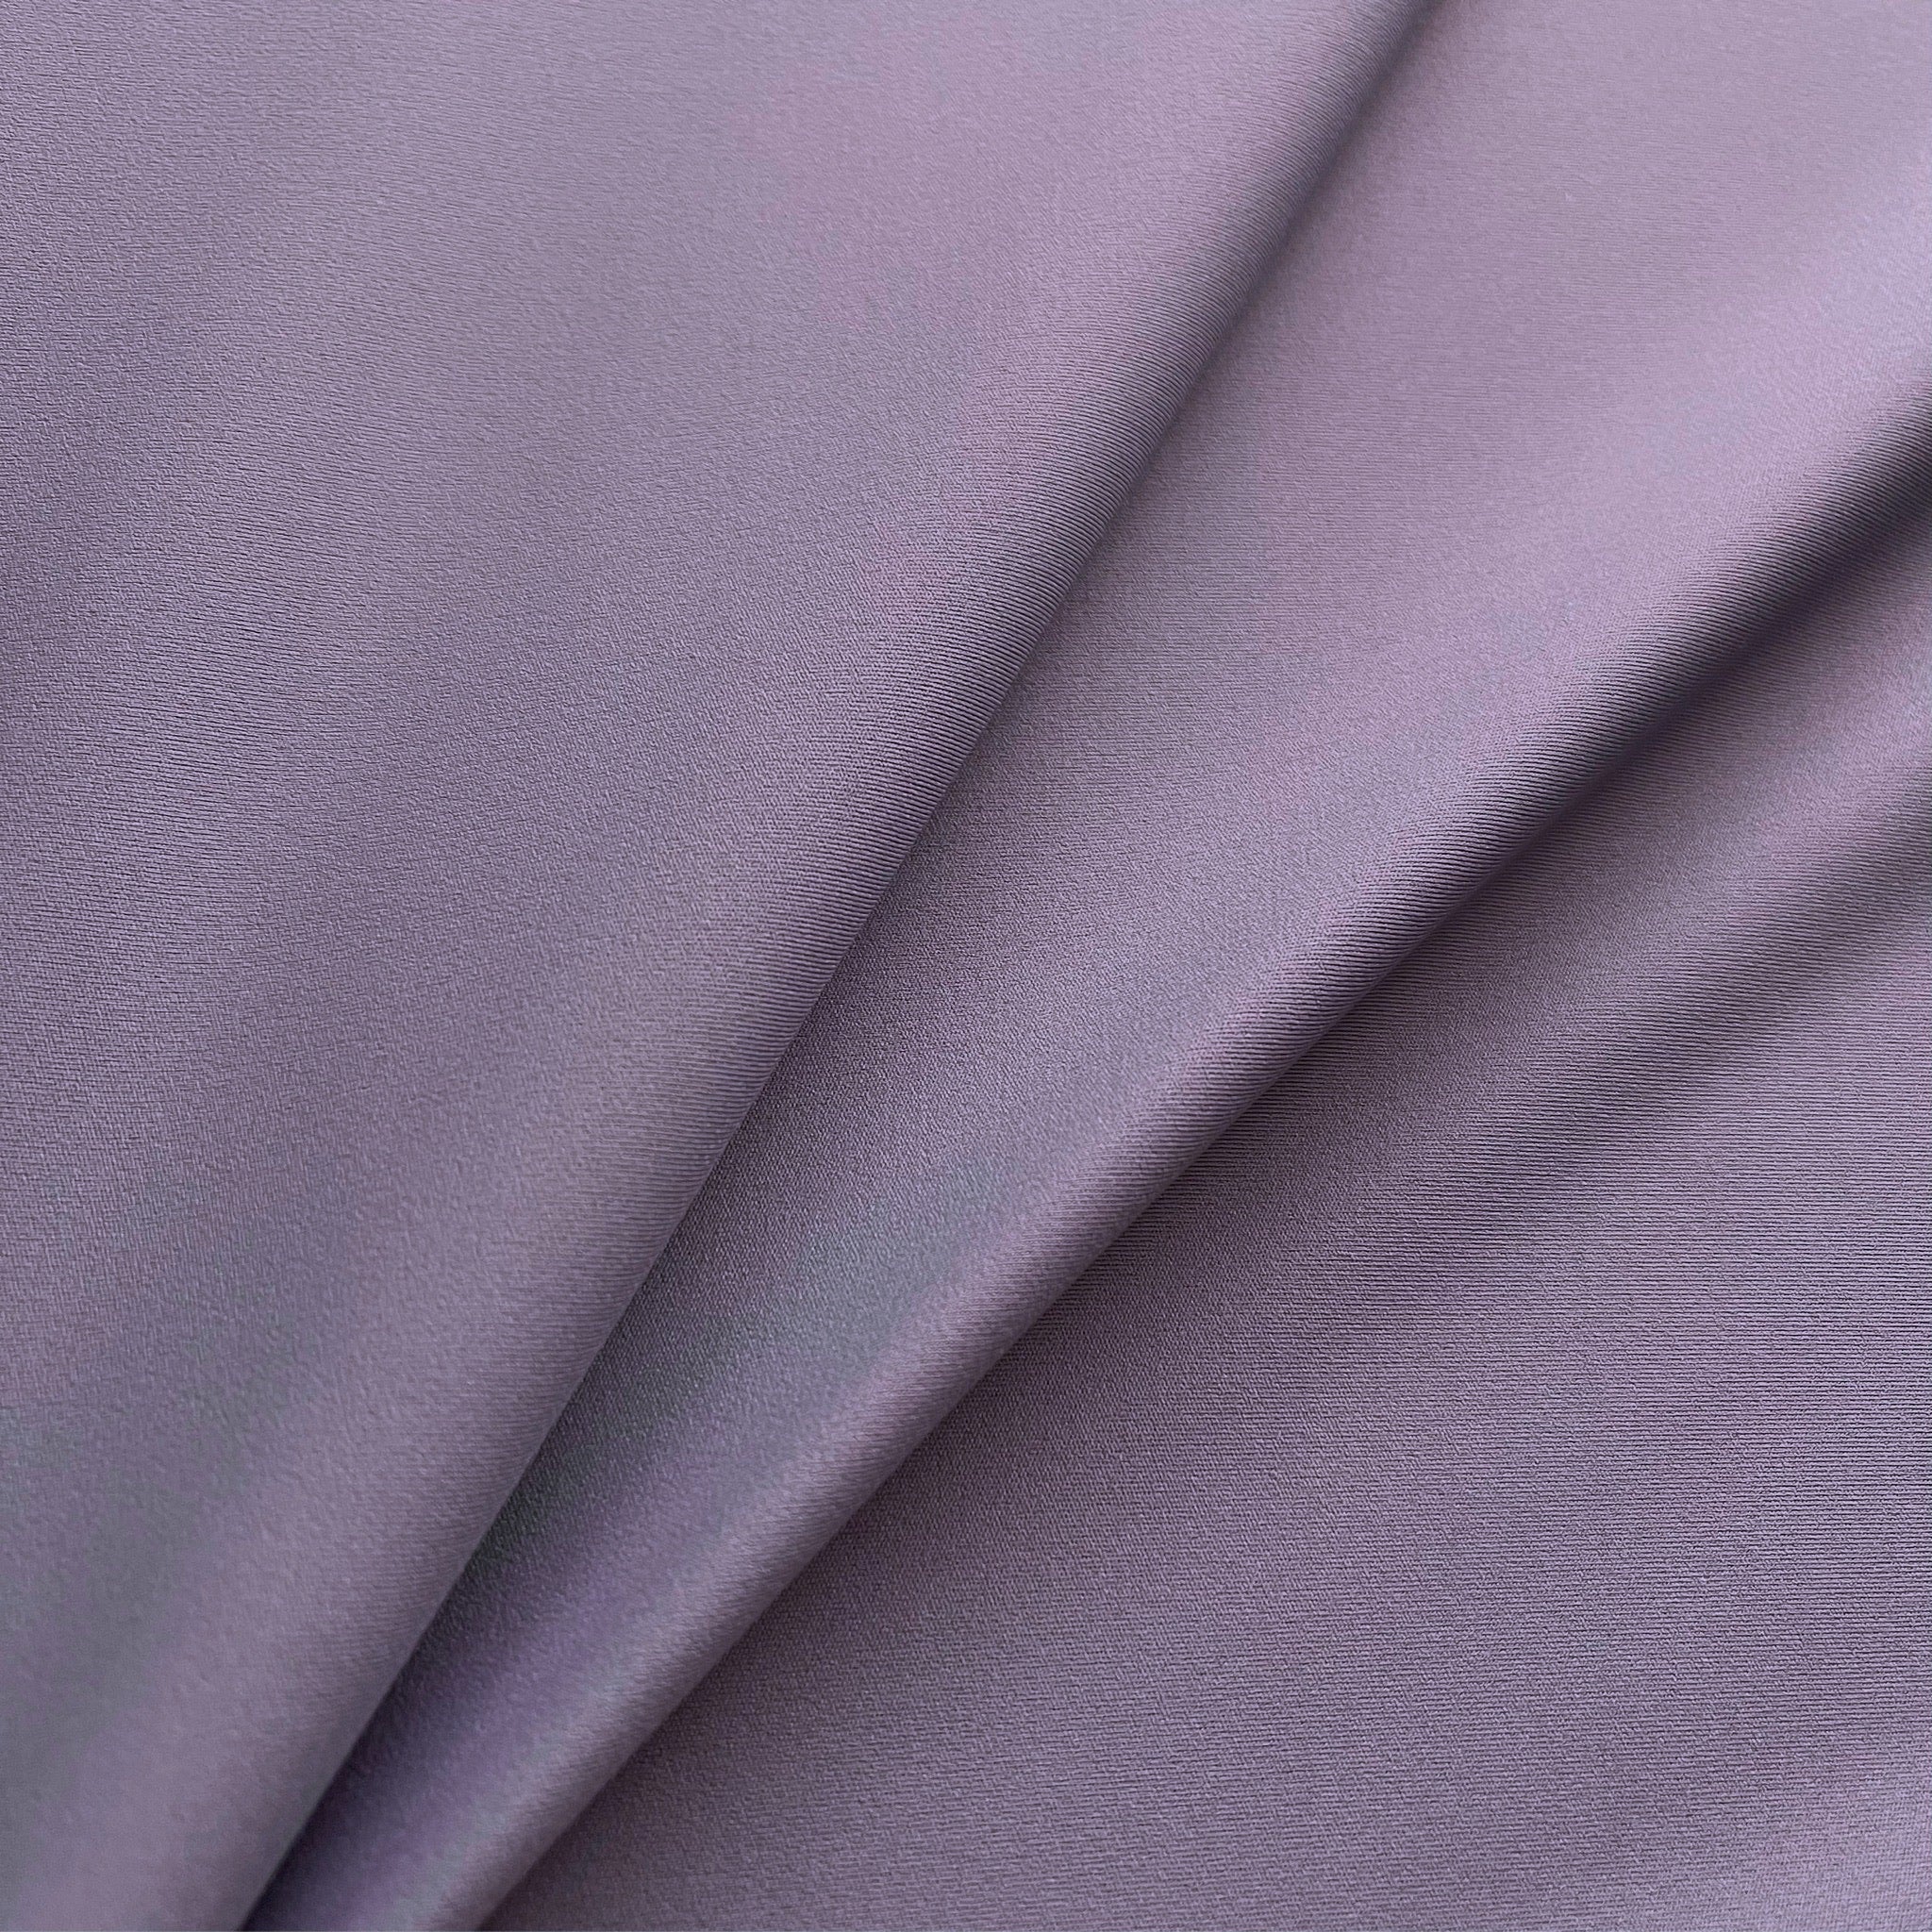 Greenstyle Fabric – Tagged Nylon Spandex